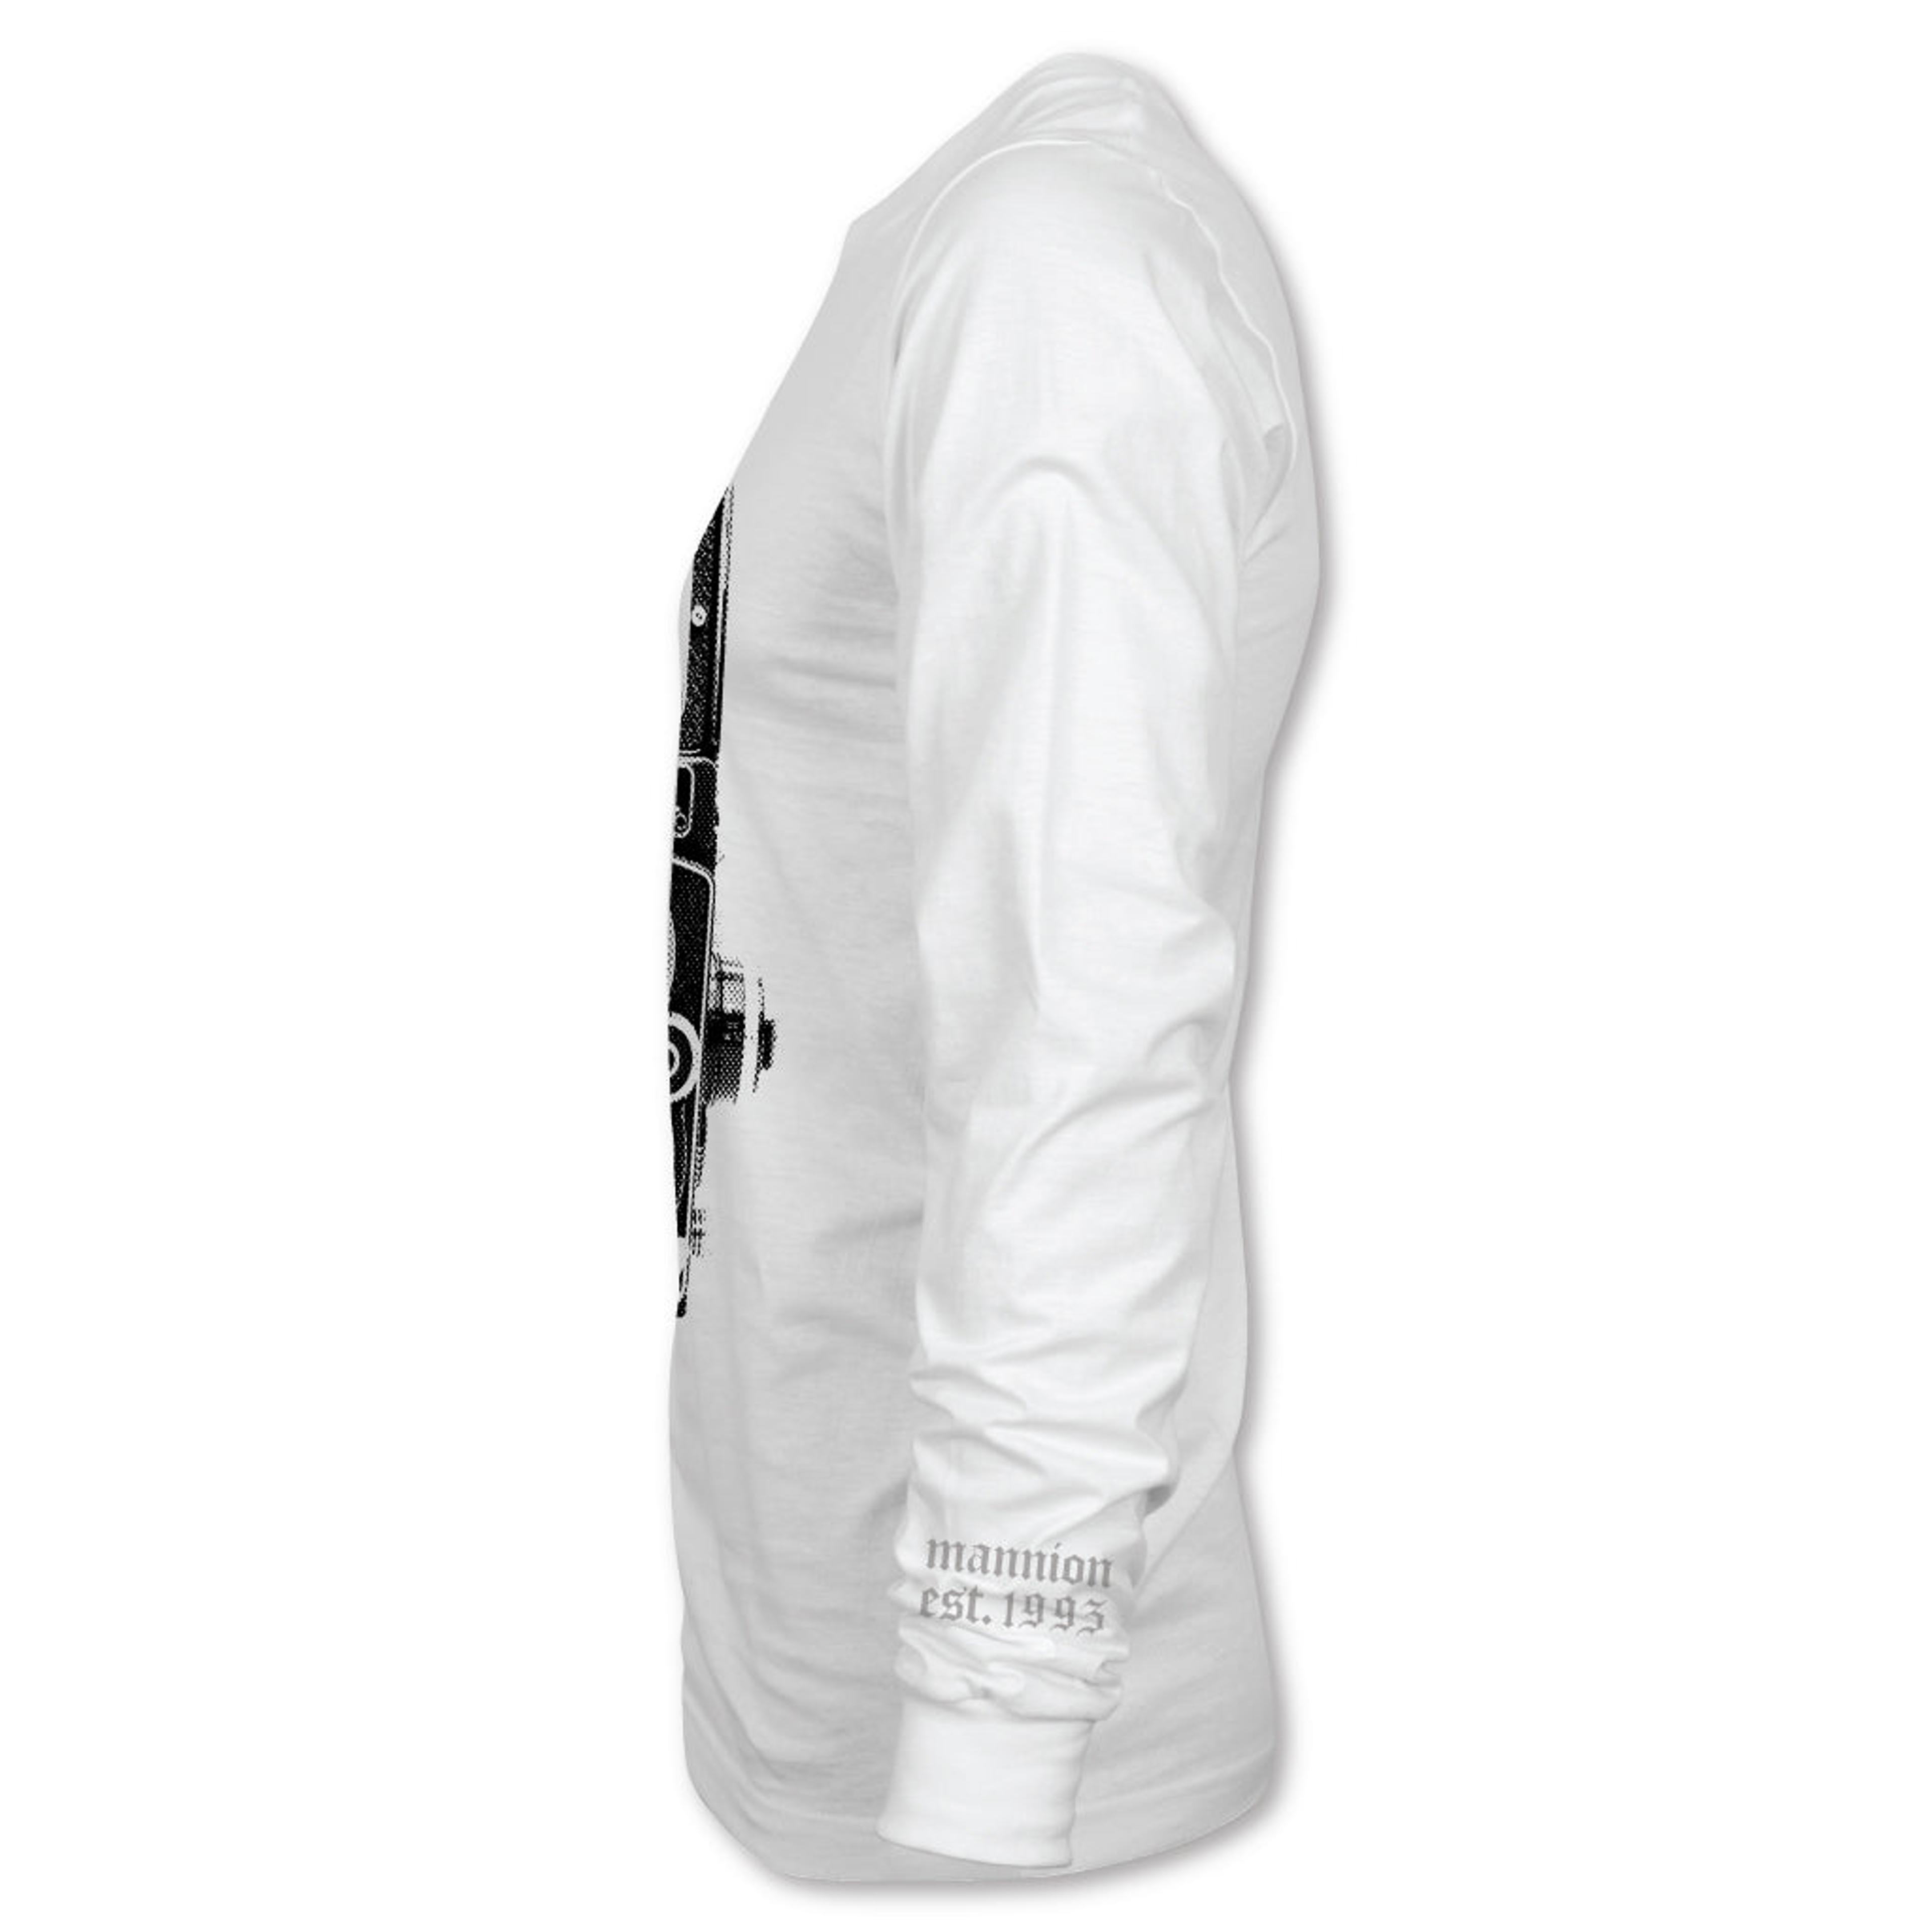 Alternate View 1 of Mannion Flex Long Sleeve White Shirt